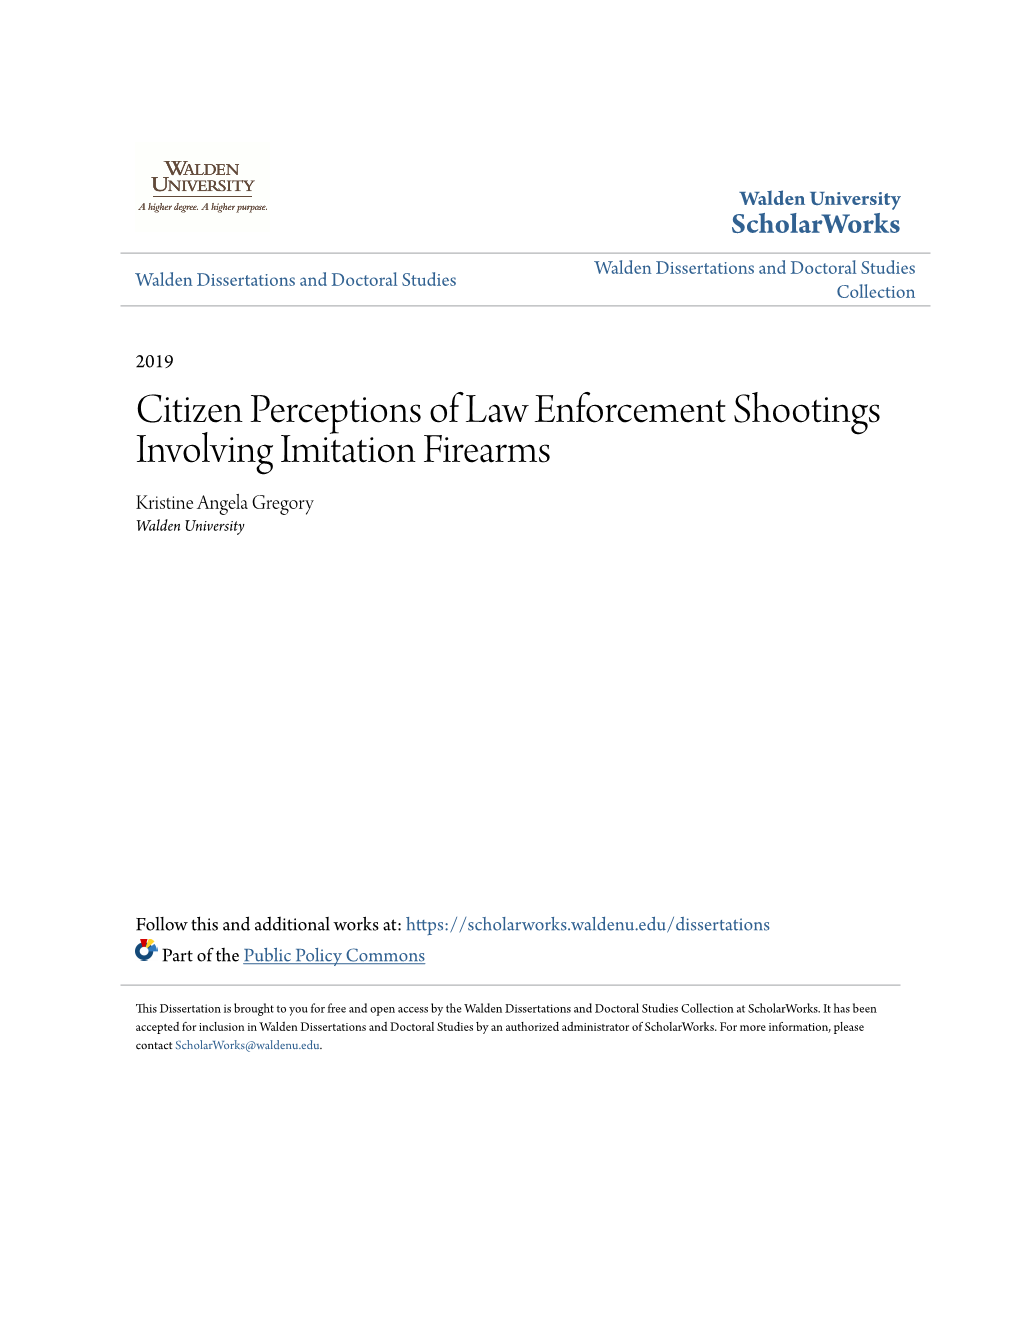 Citizen Perceptions of Law Enforcement Shootings Involving Imitation Firearms Kristine Angela Gregory Walden University